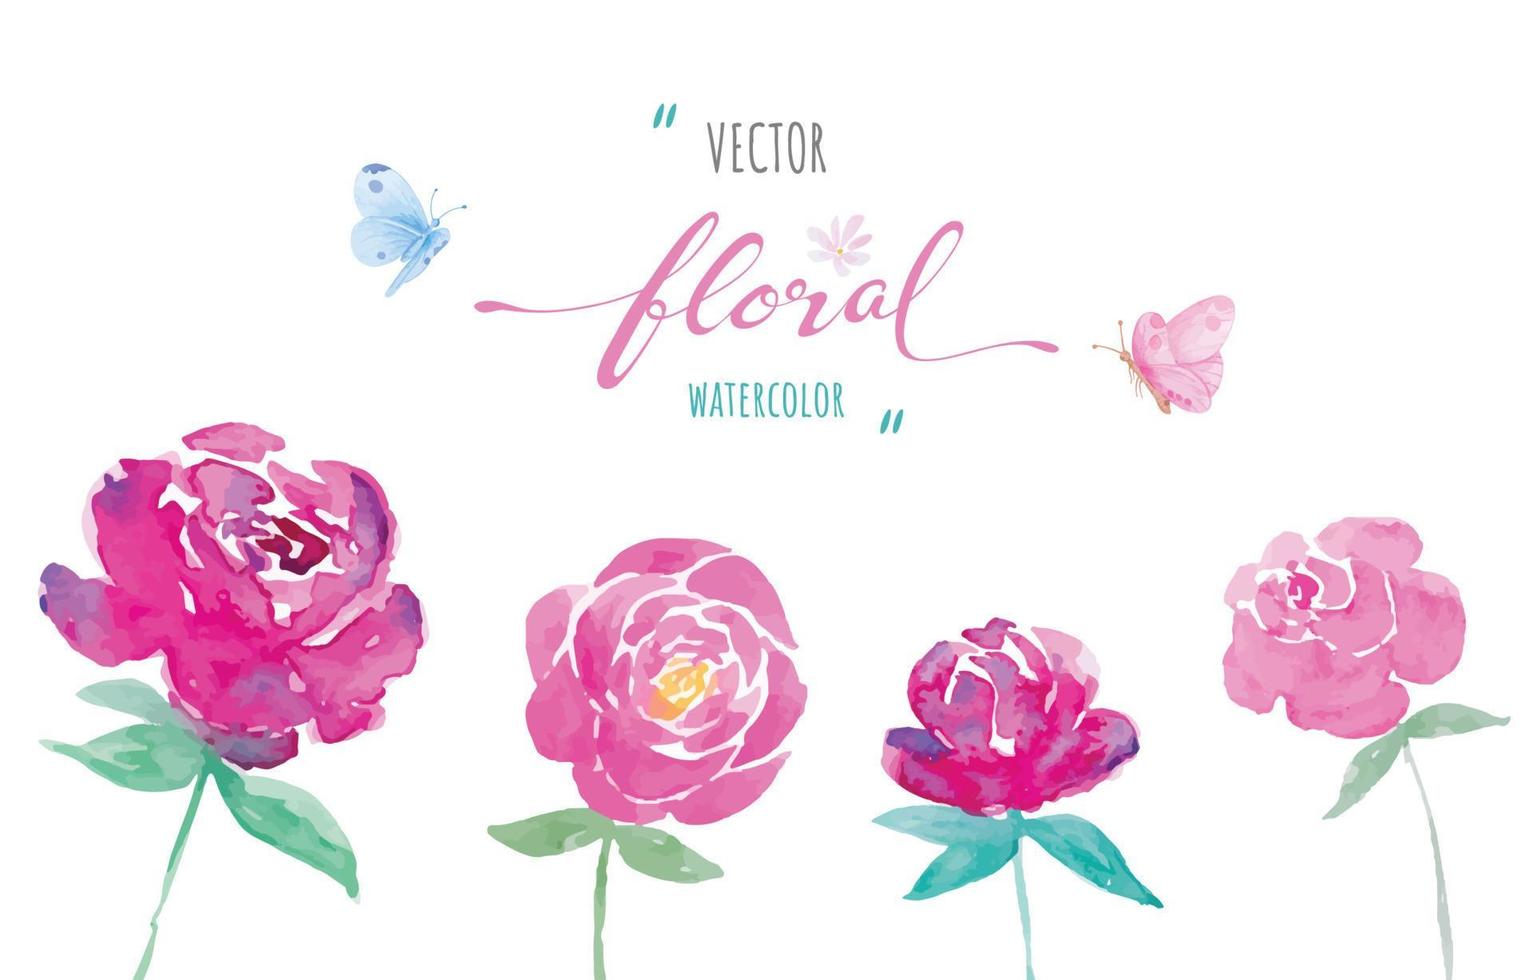 acuarela pintada a mano ilustración hermosa rosa flor botánica hoja y mariposa para amor boda día de san valentín o arreglo diseño de invitación tarjeta de felicitación vector